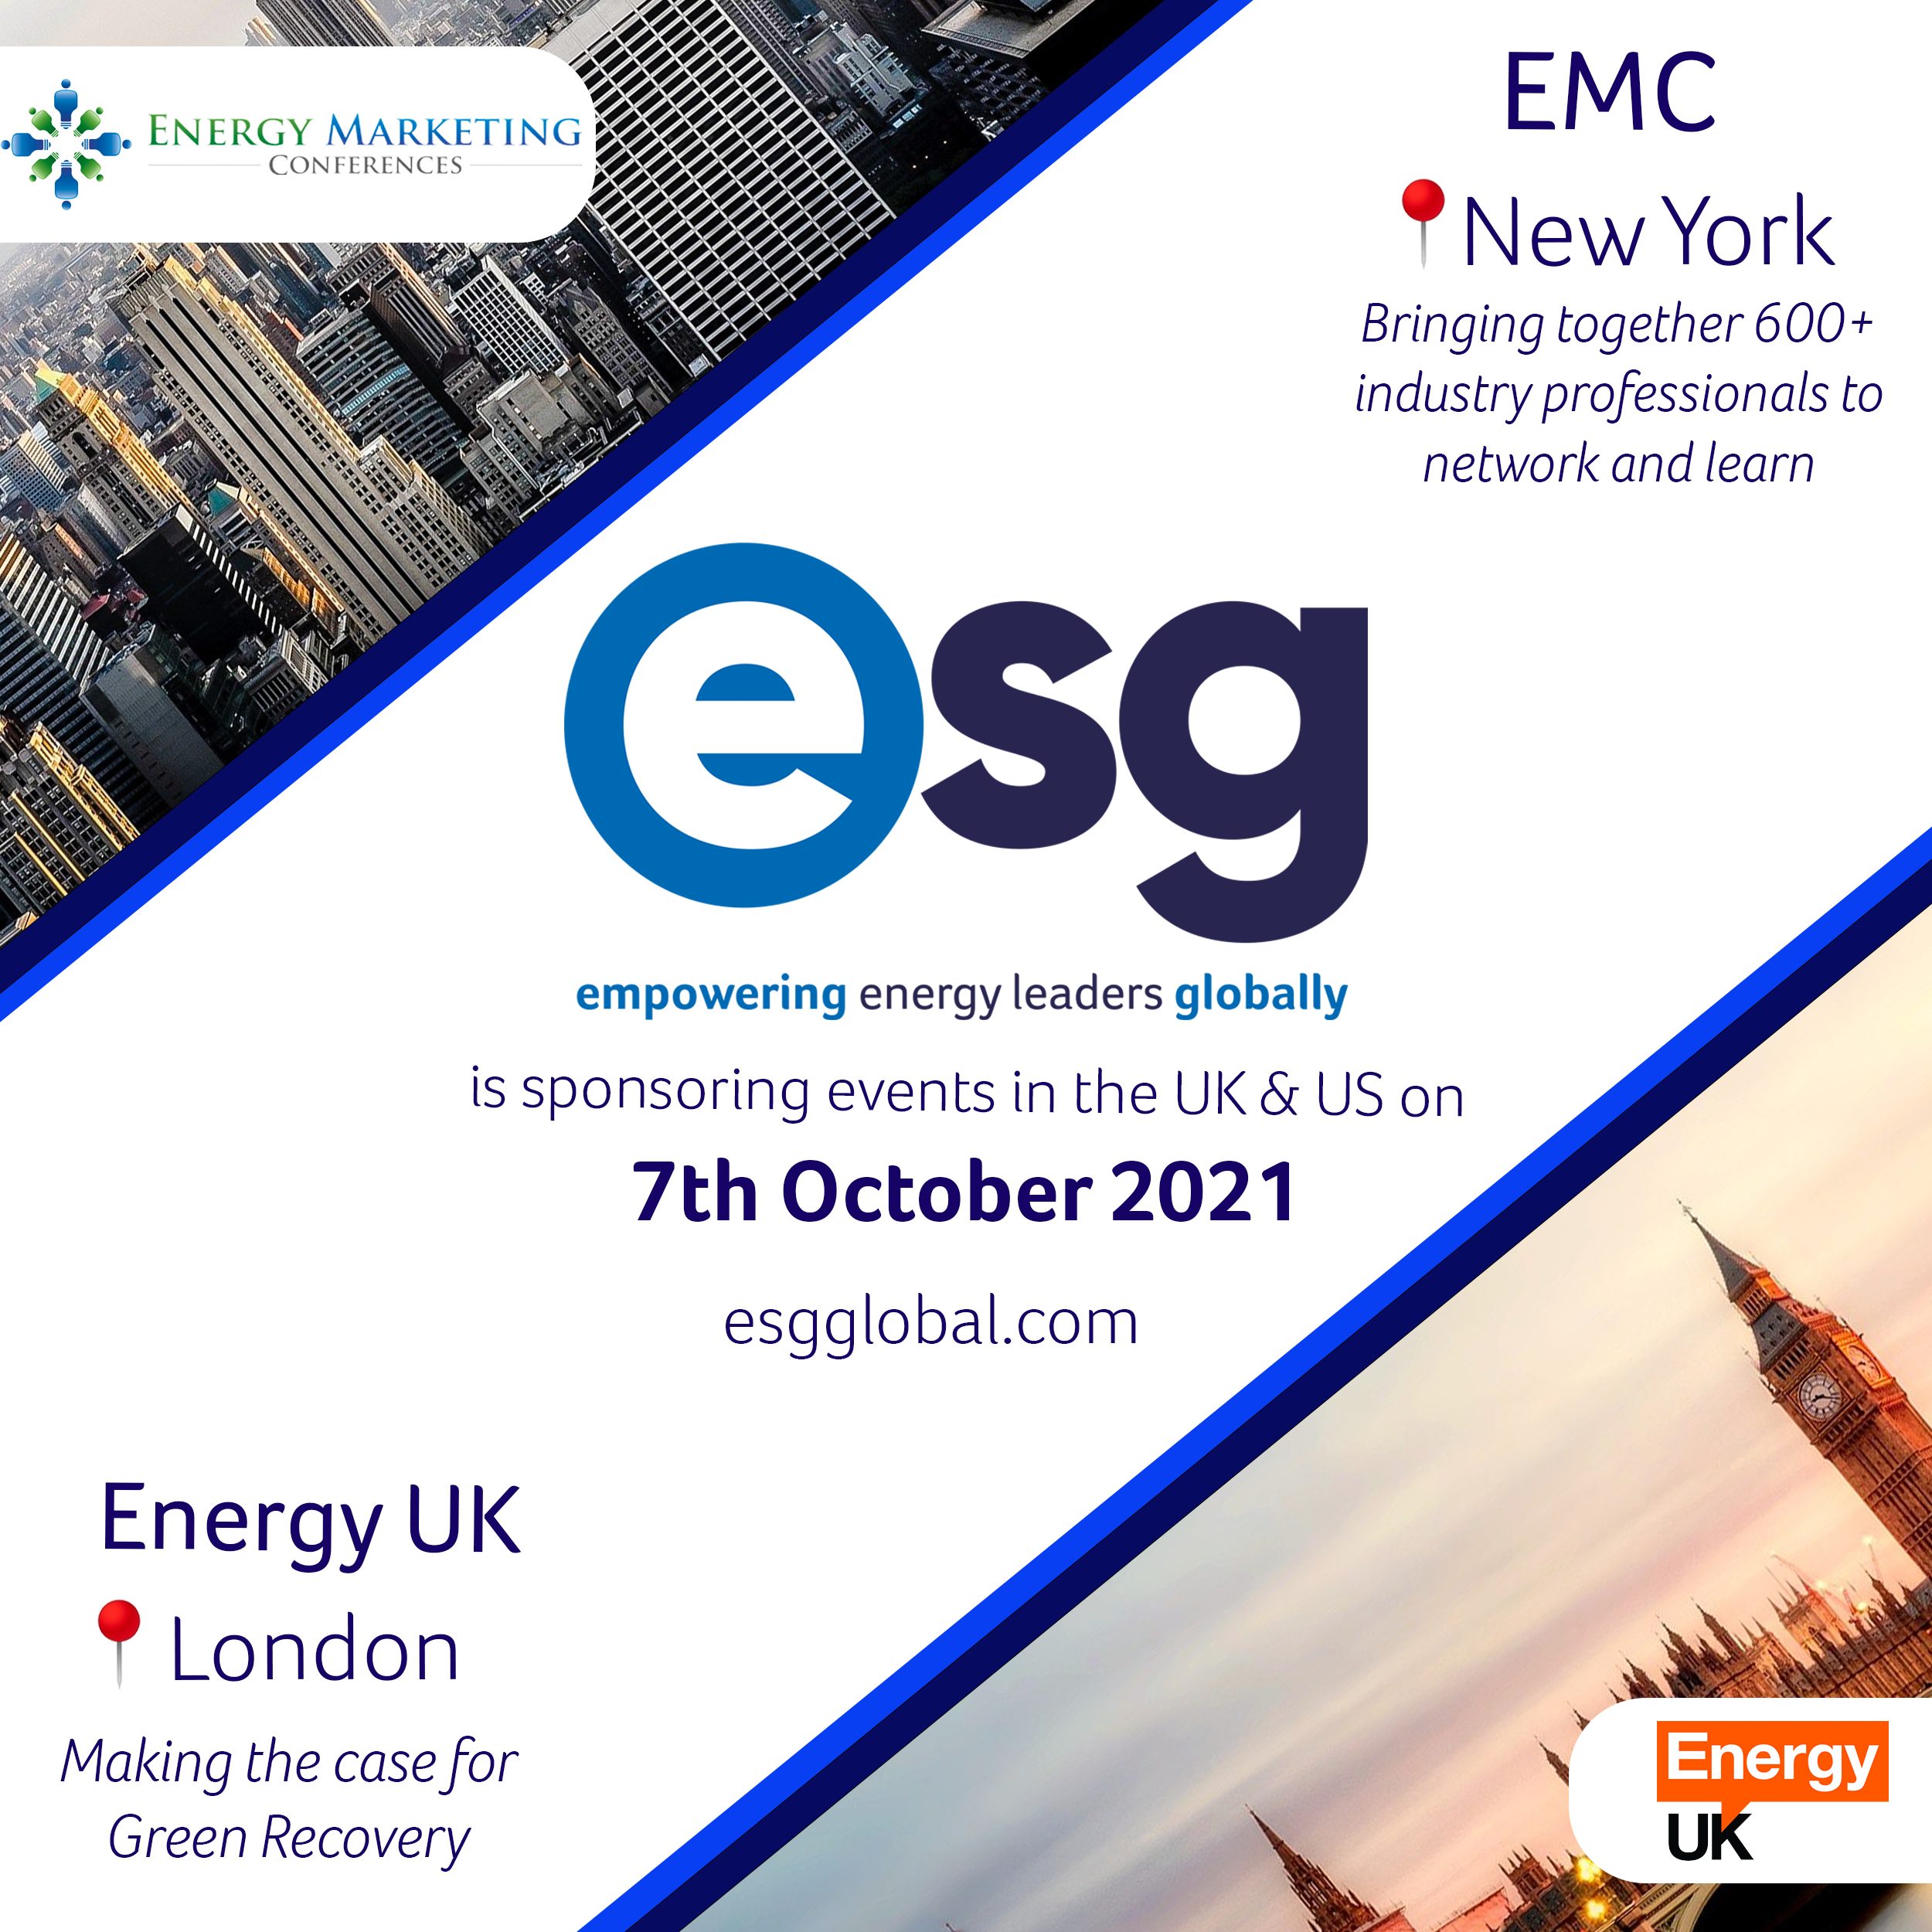 ESG is sponsoring EMC and Energy UK